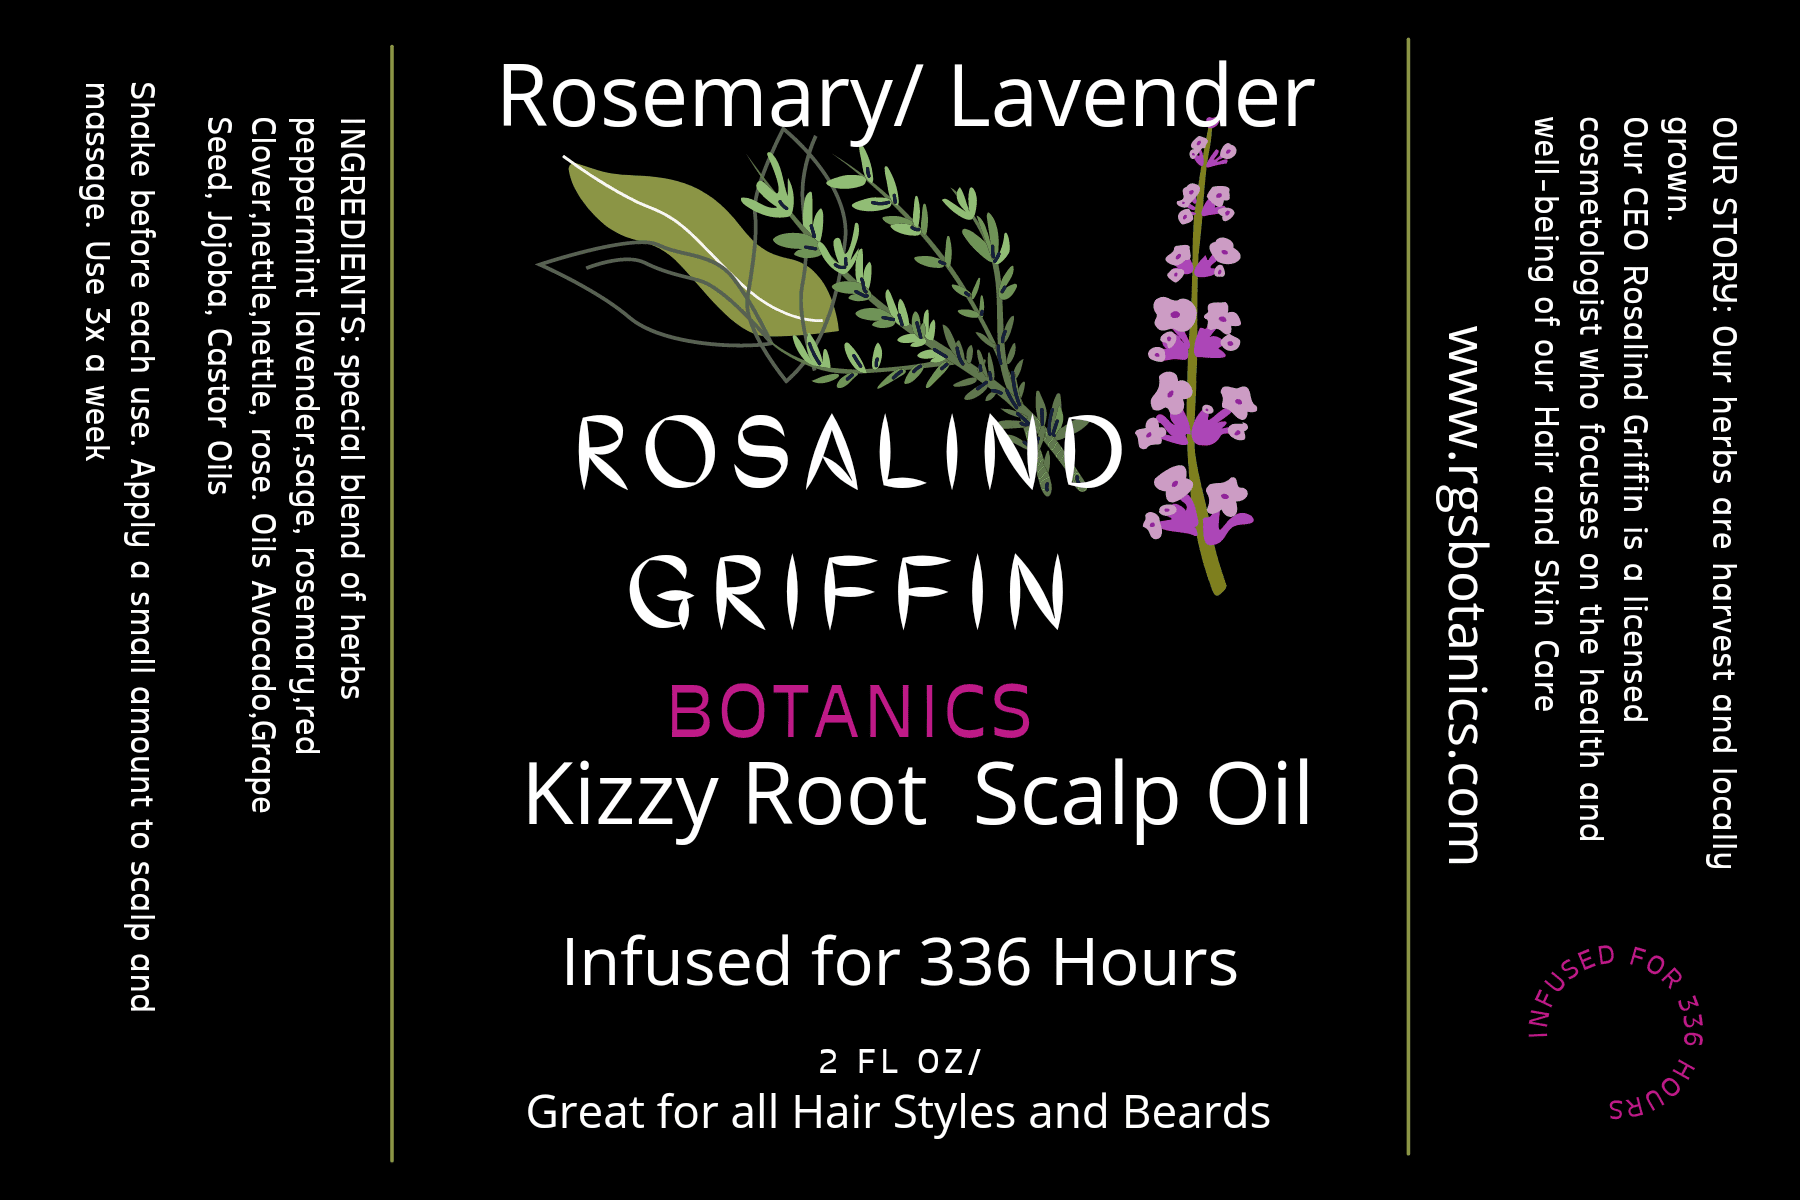 Rosalind Griffin Botanics